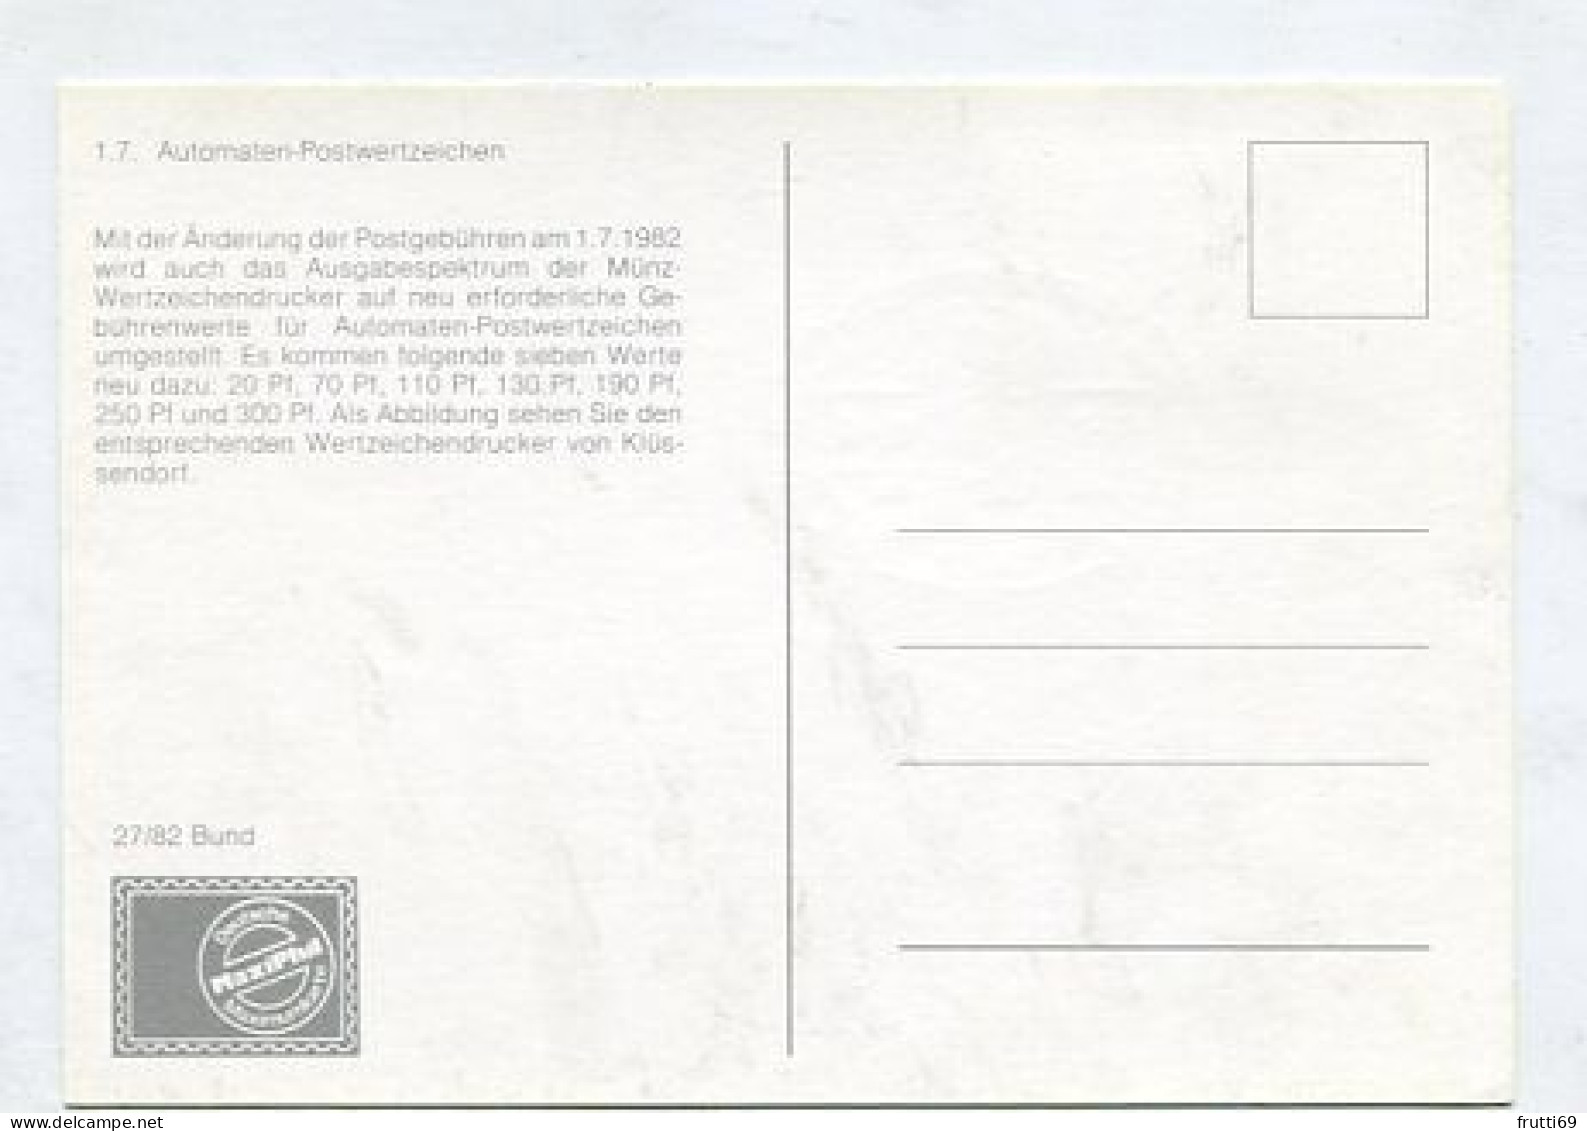 MC 211920 GERMANY - 1982 - Automaten-Postwertzeichen - 1981-2000